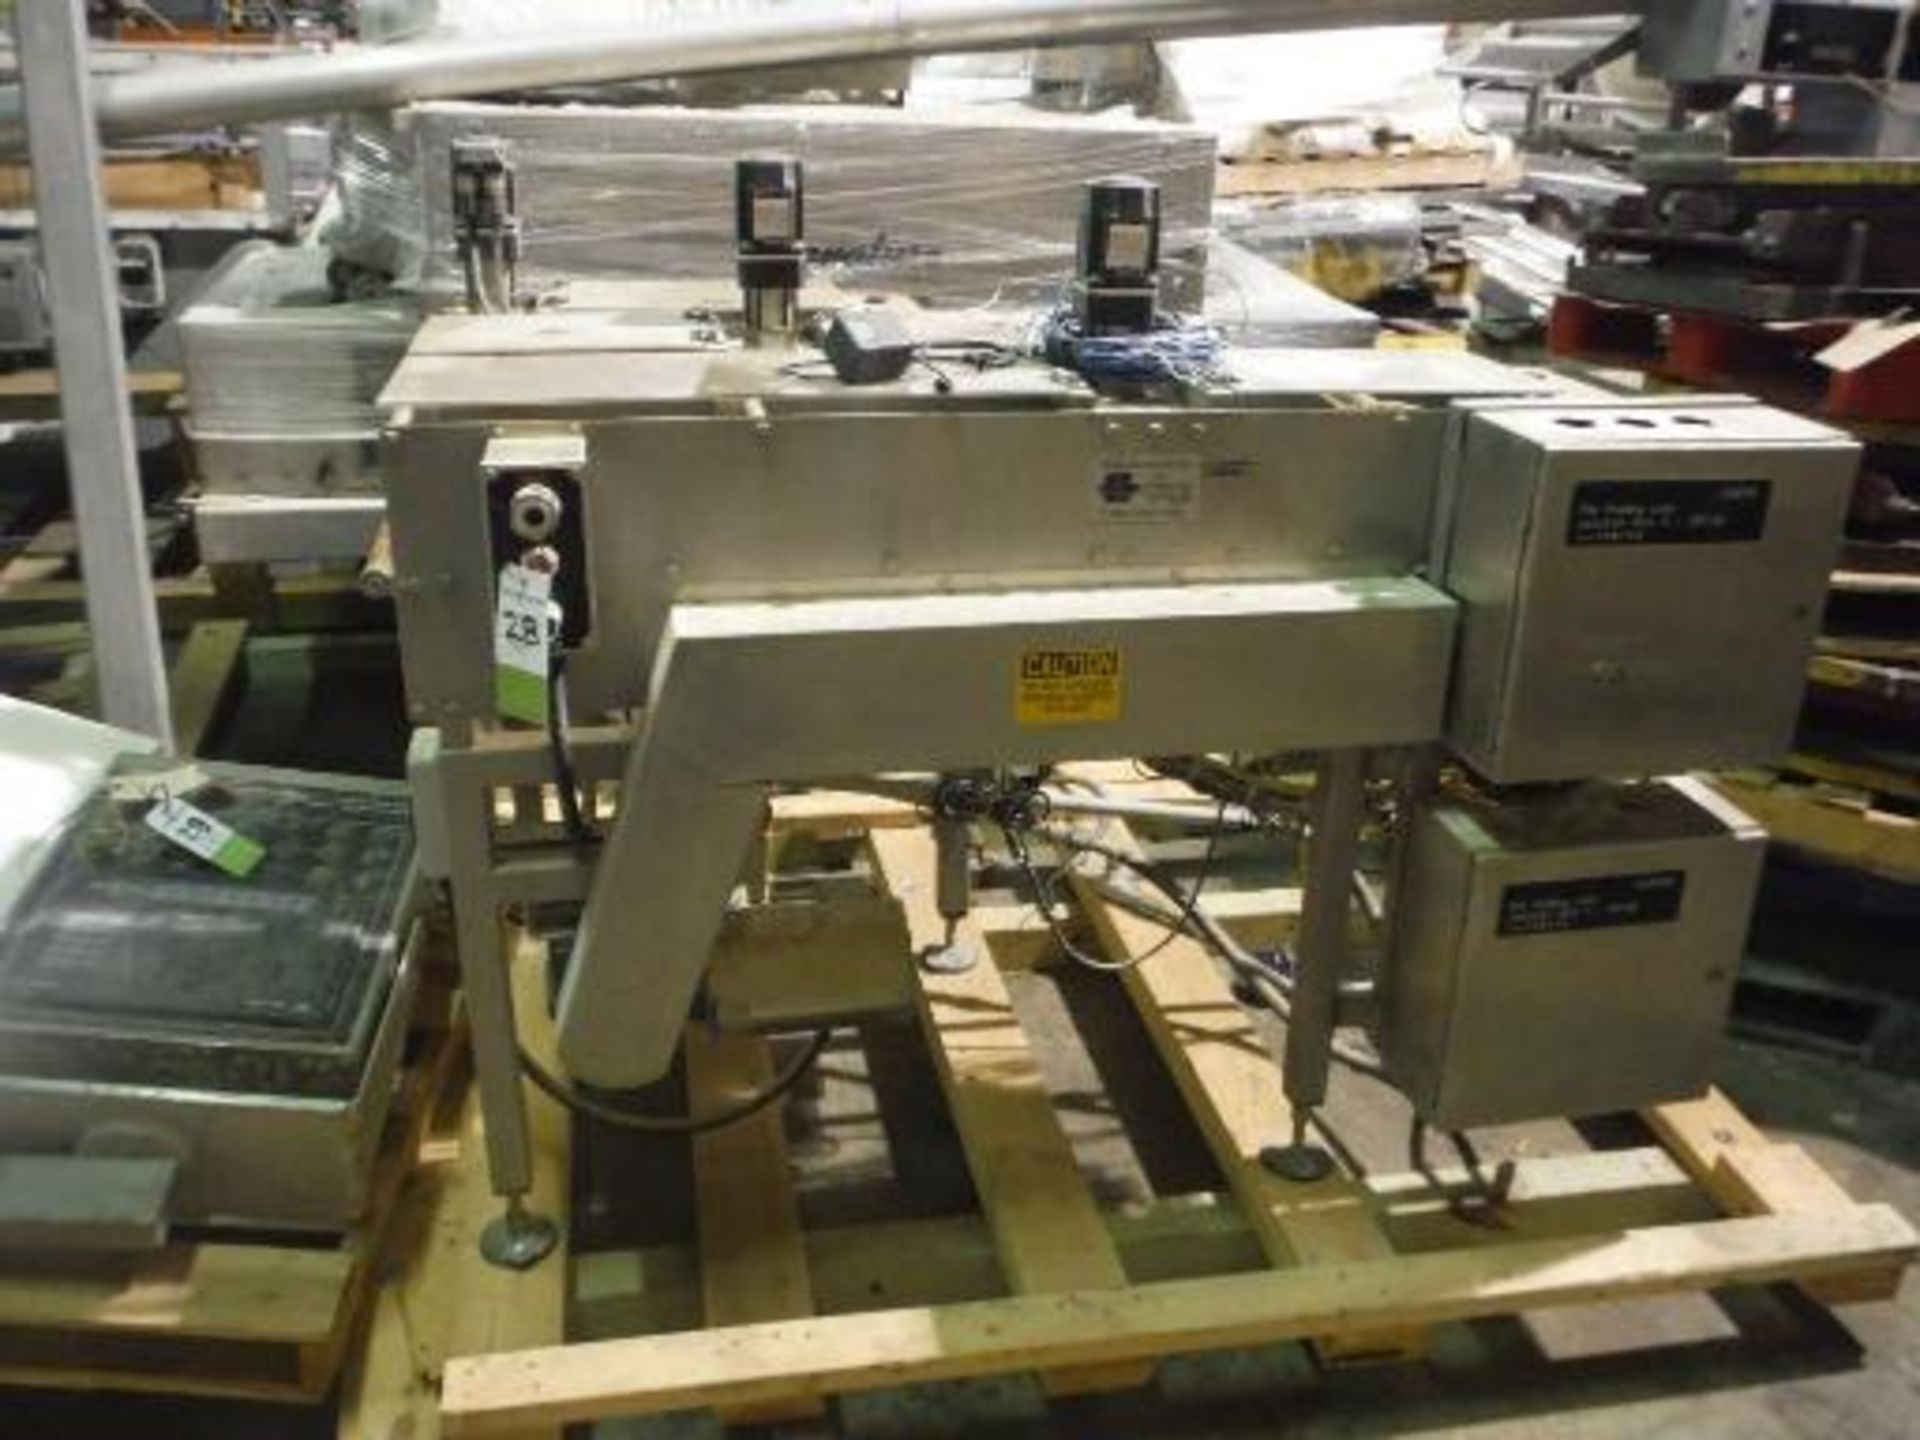 Henry Group Pie Folding Conveyor w/ Allen Bradley Control Panel, Asset #: 50900432 (ET-25948)